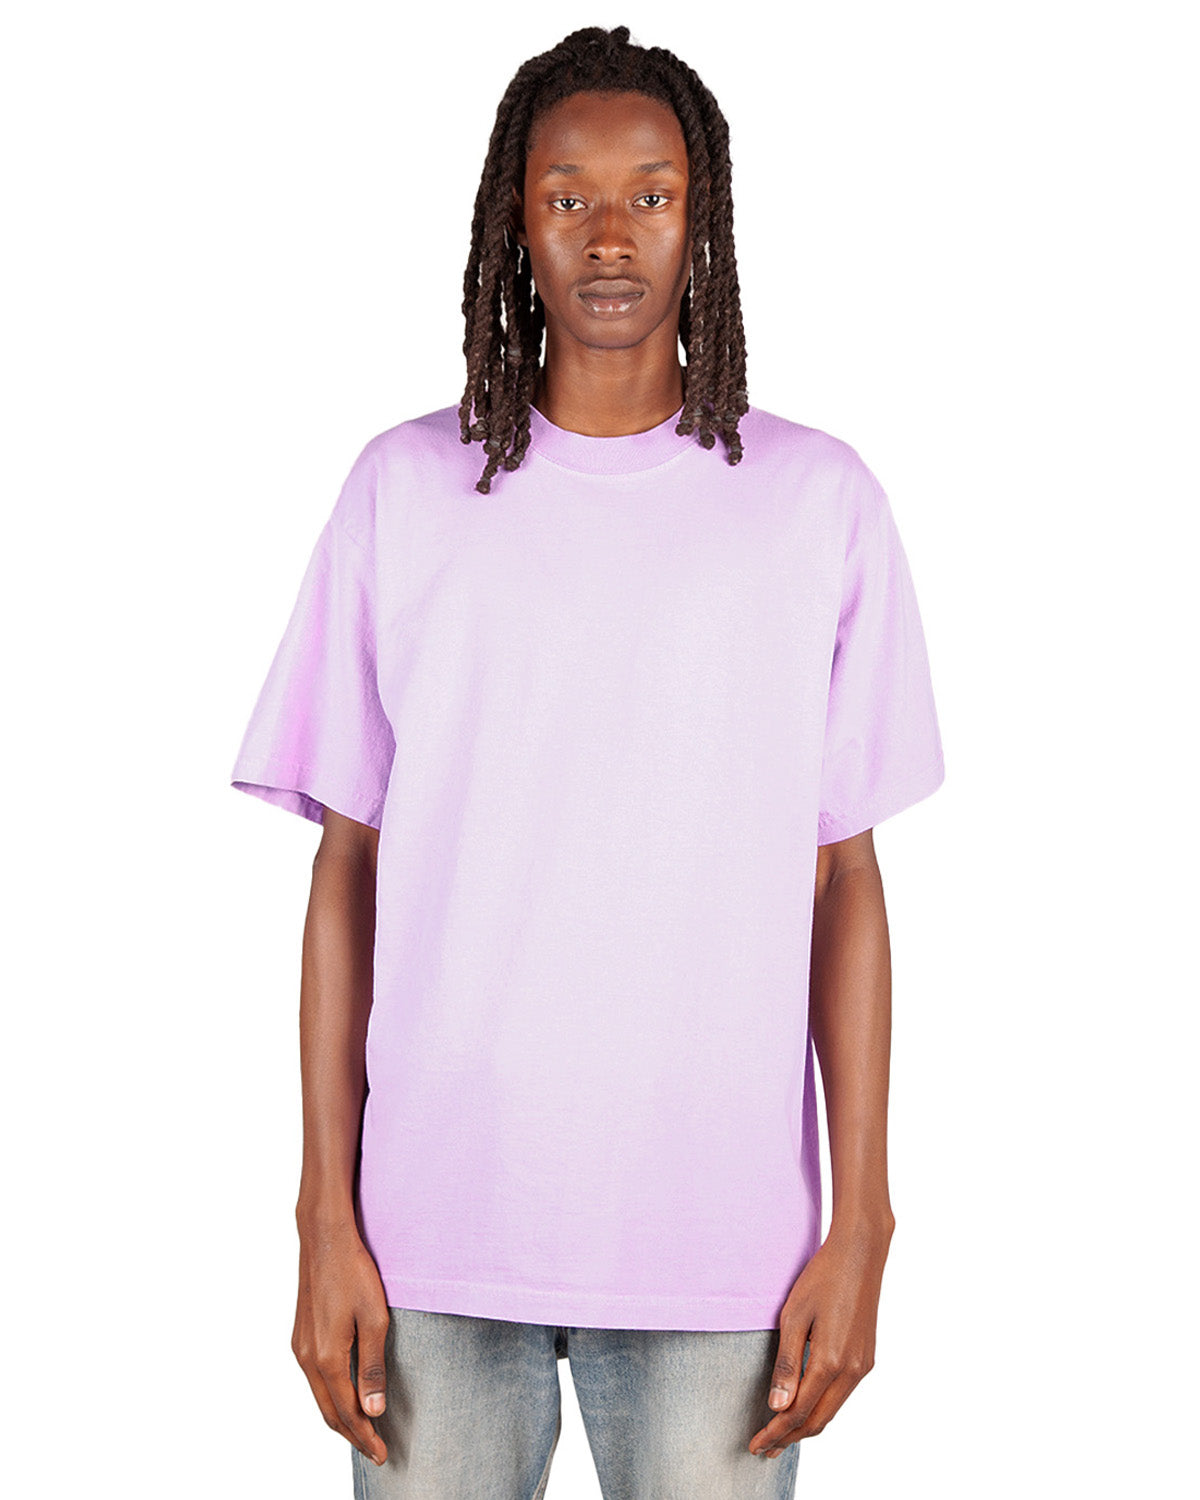 Mona T-Shirt x A2Z Wholesale Apparel, SHAKA RESTOCK 🤭🛒 🛒 SHAKA WEAR-  7.5 Oz. Max Heavyweight 🛒 SHAKA WEAR- 7.5 Oz. Garment Dye Drop Shoulder, ShakaWear #monatsh